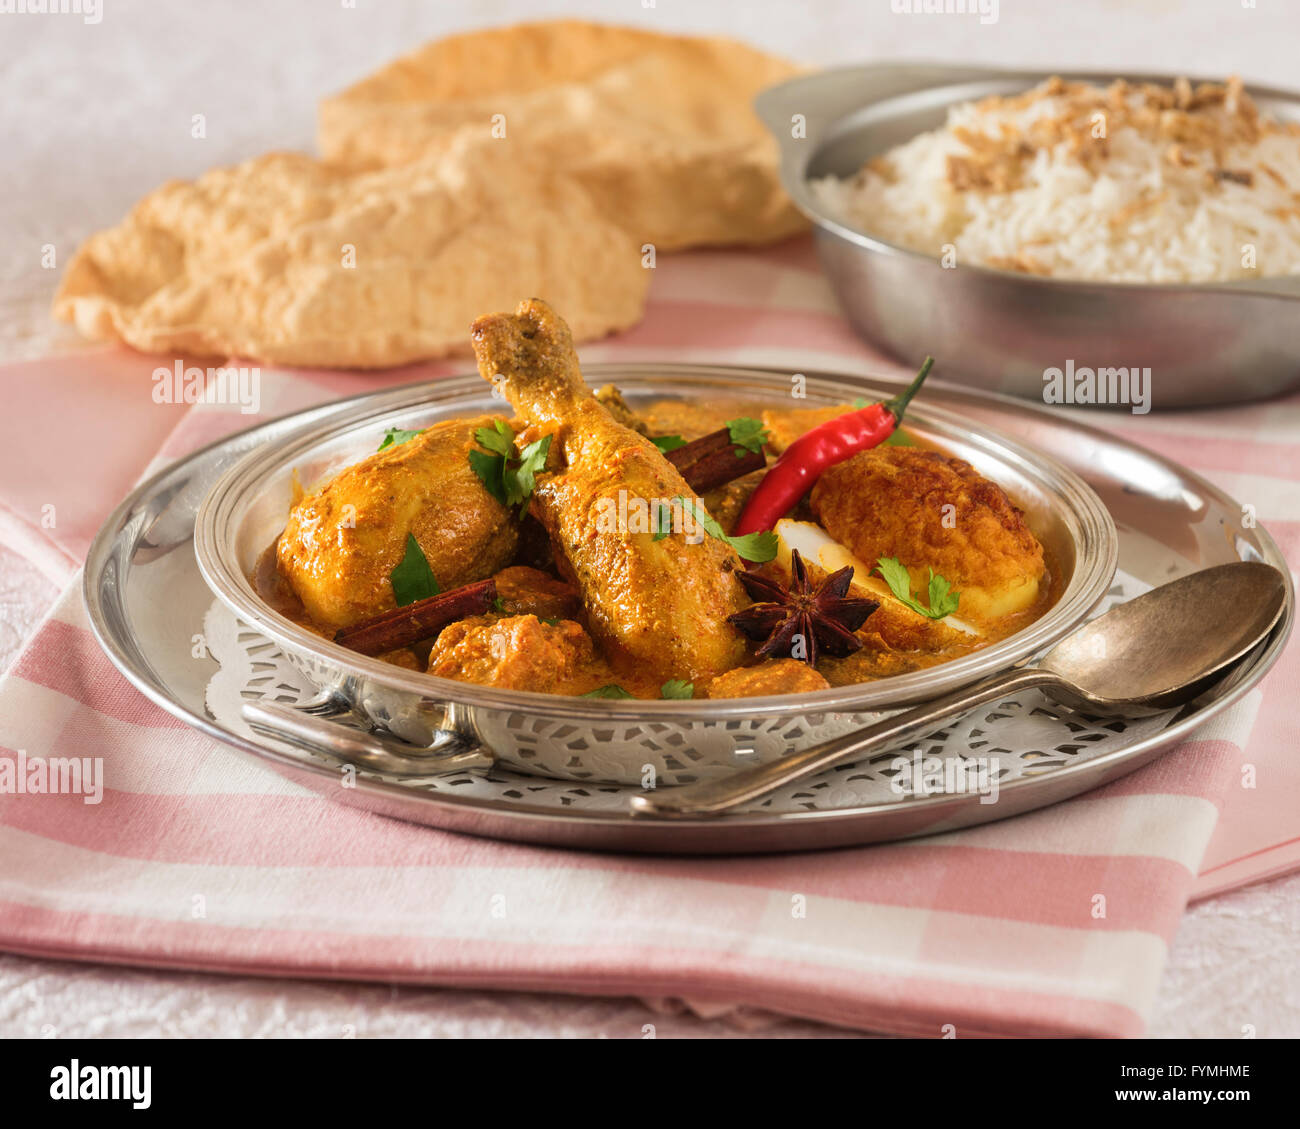 Dak bungalow pollo al curry. Anglo comida india Foto de stock